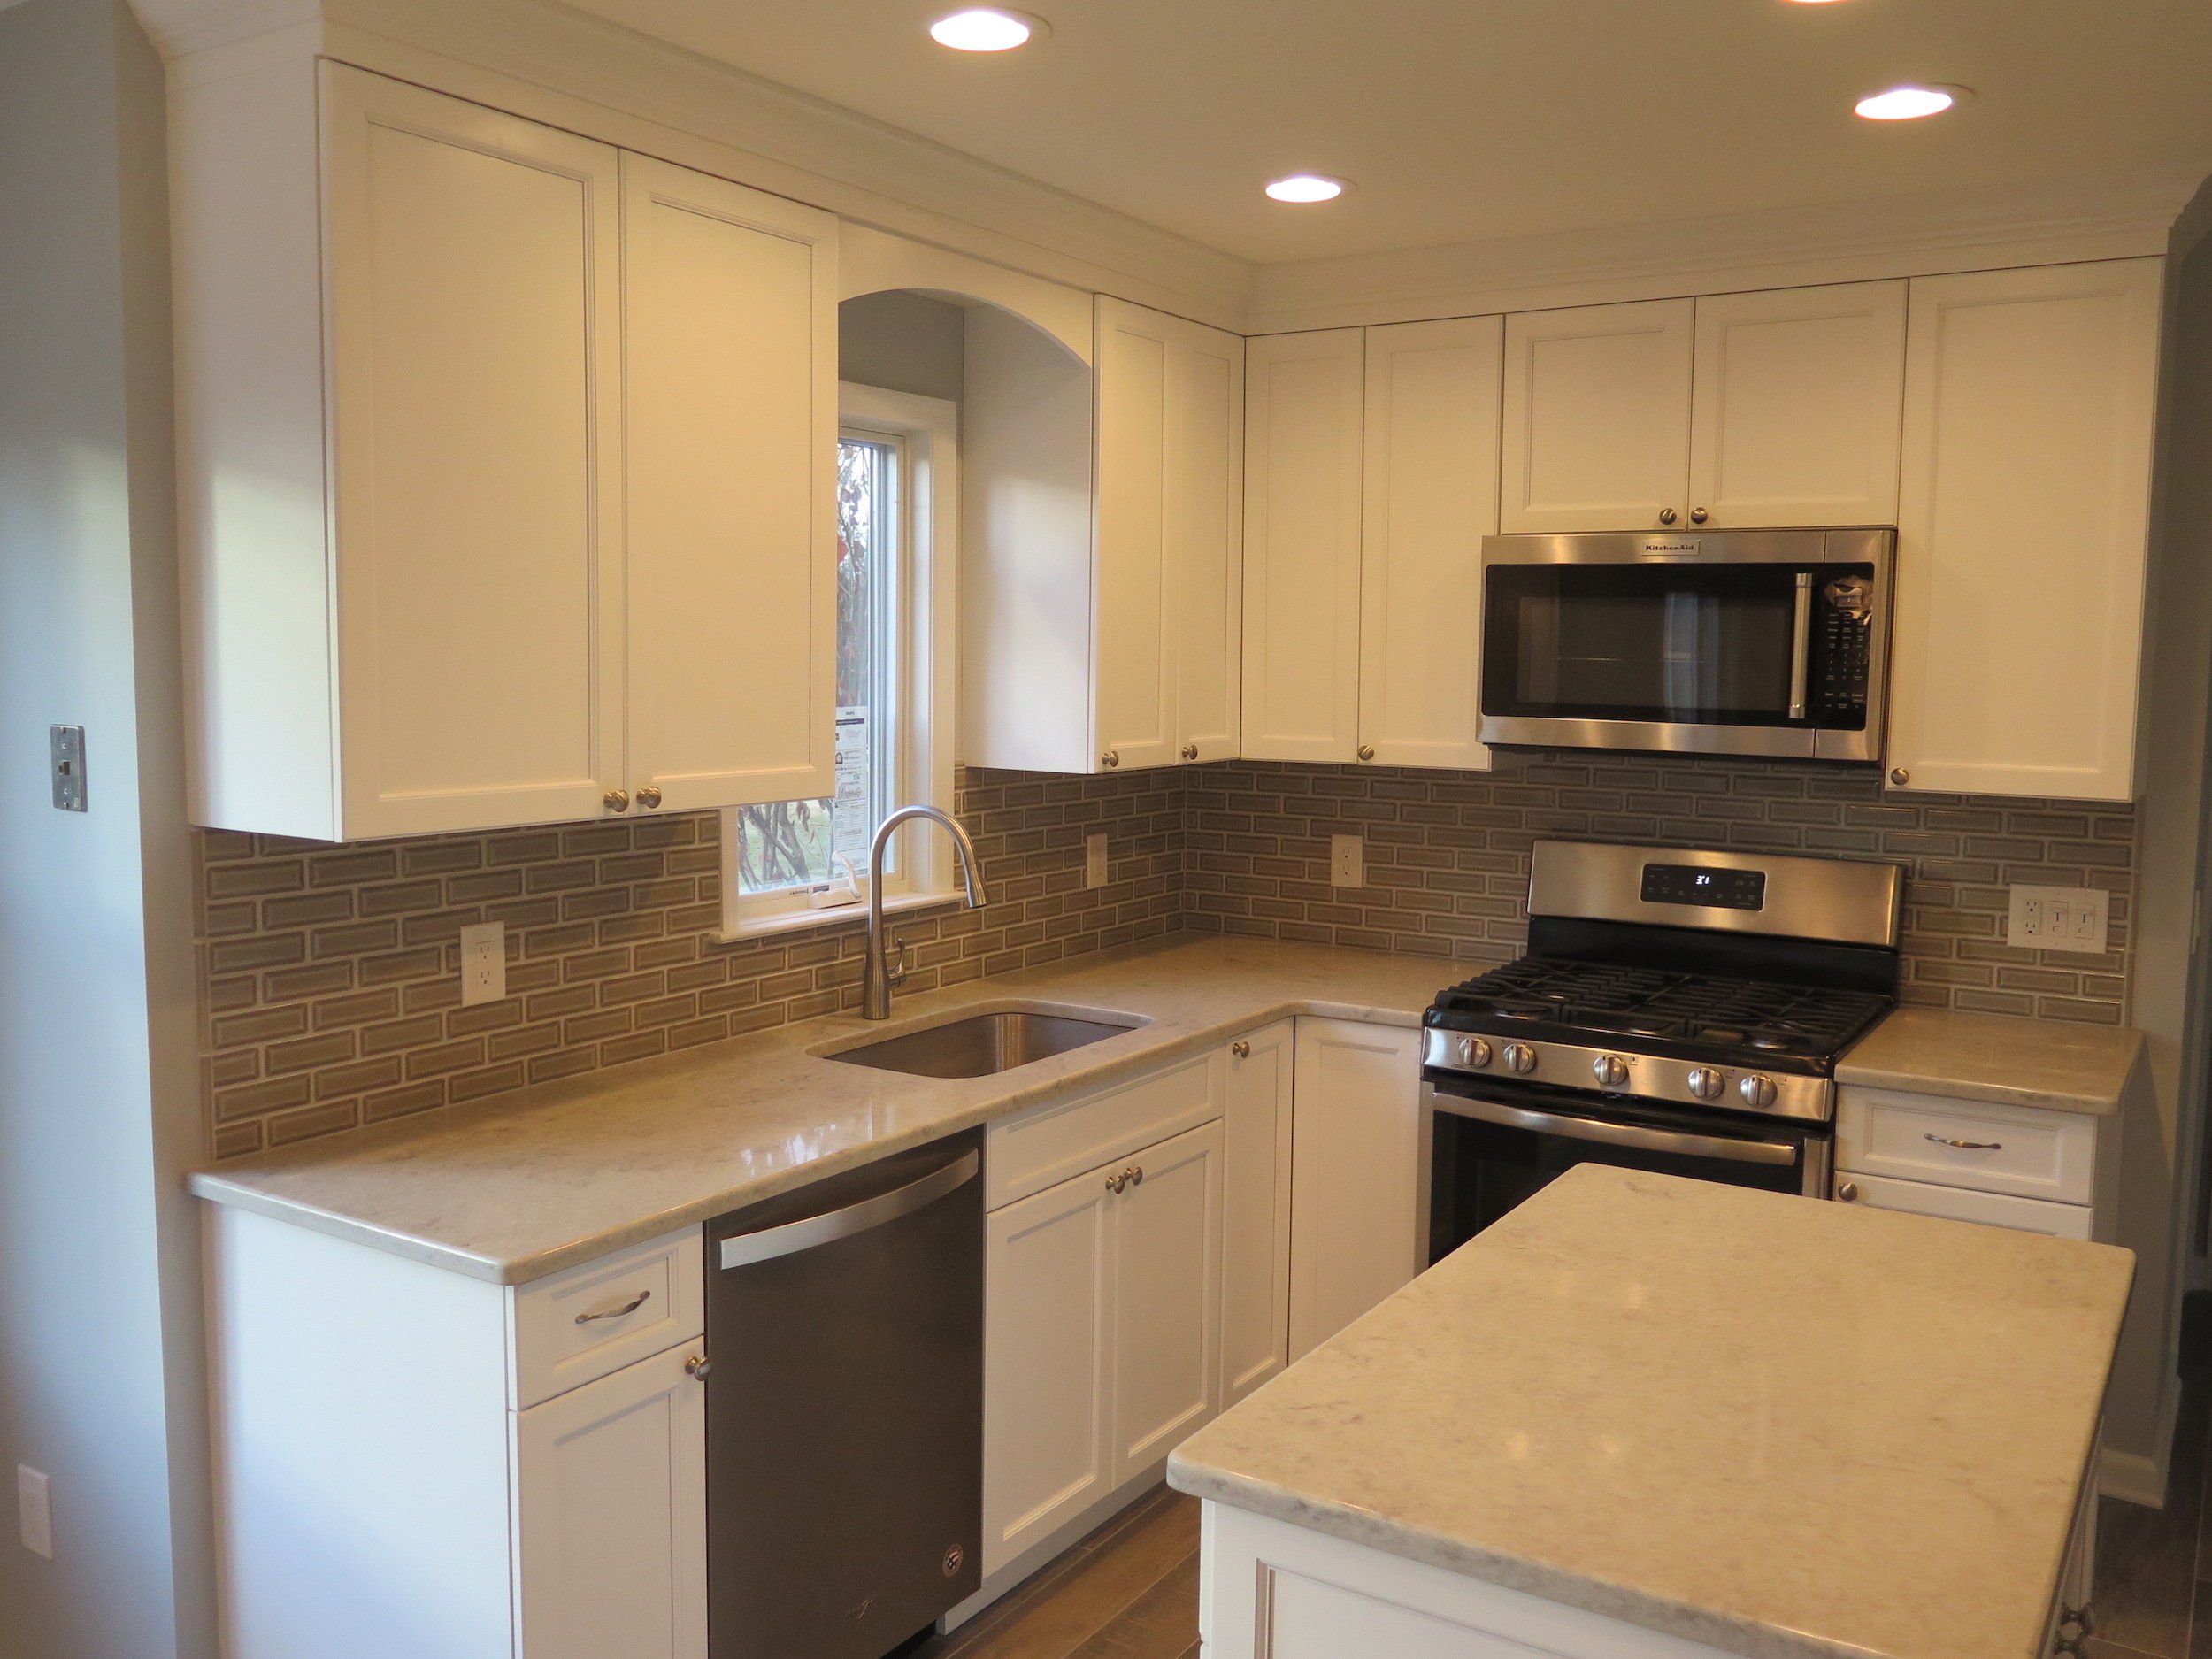 Kitchen Transformation - All new white cabinetry, quartz countertops, beveled backsplash, new window over sink